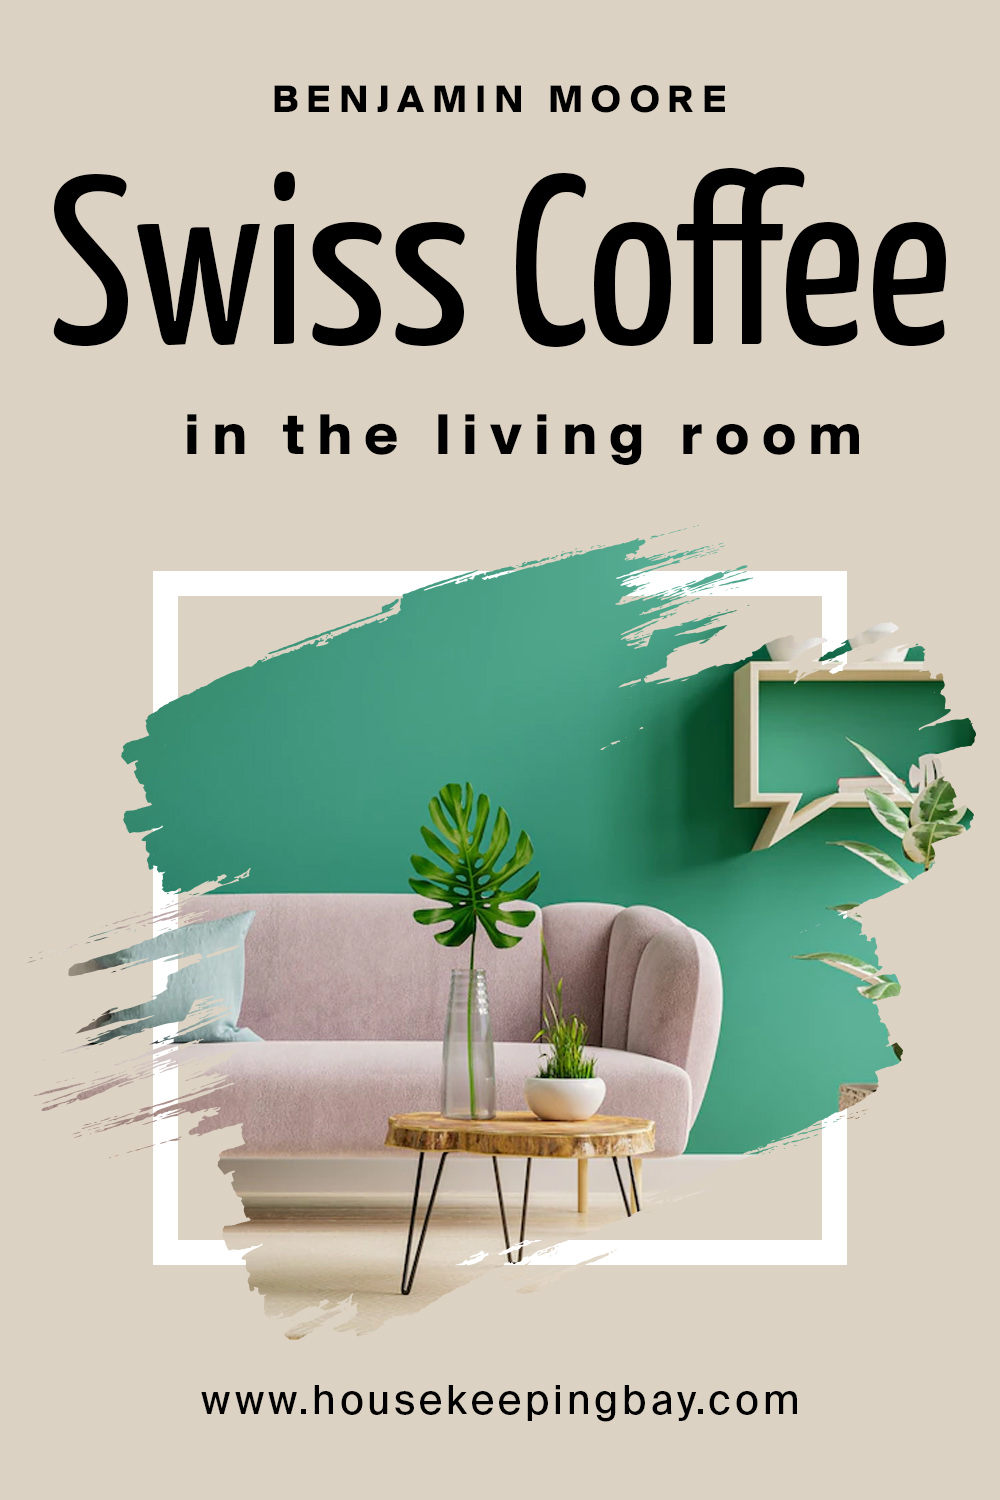 swiss coffee oc-45 by benjamin moore in the living room